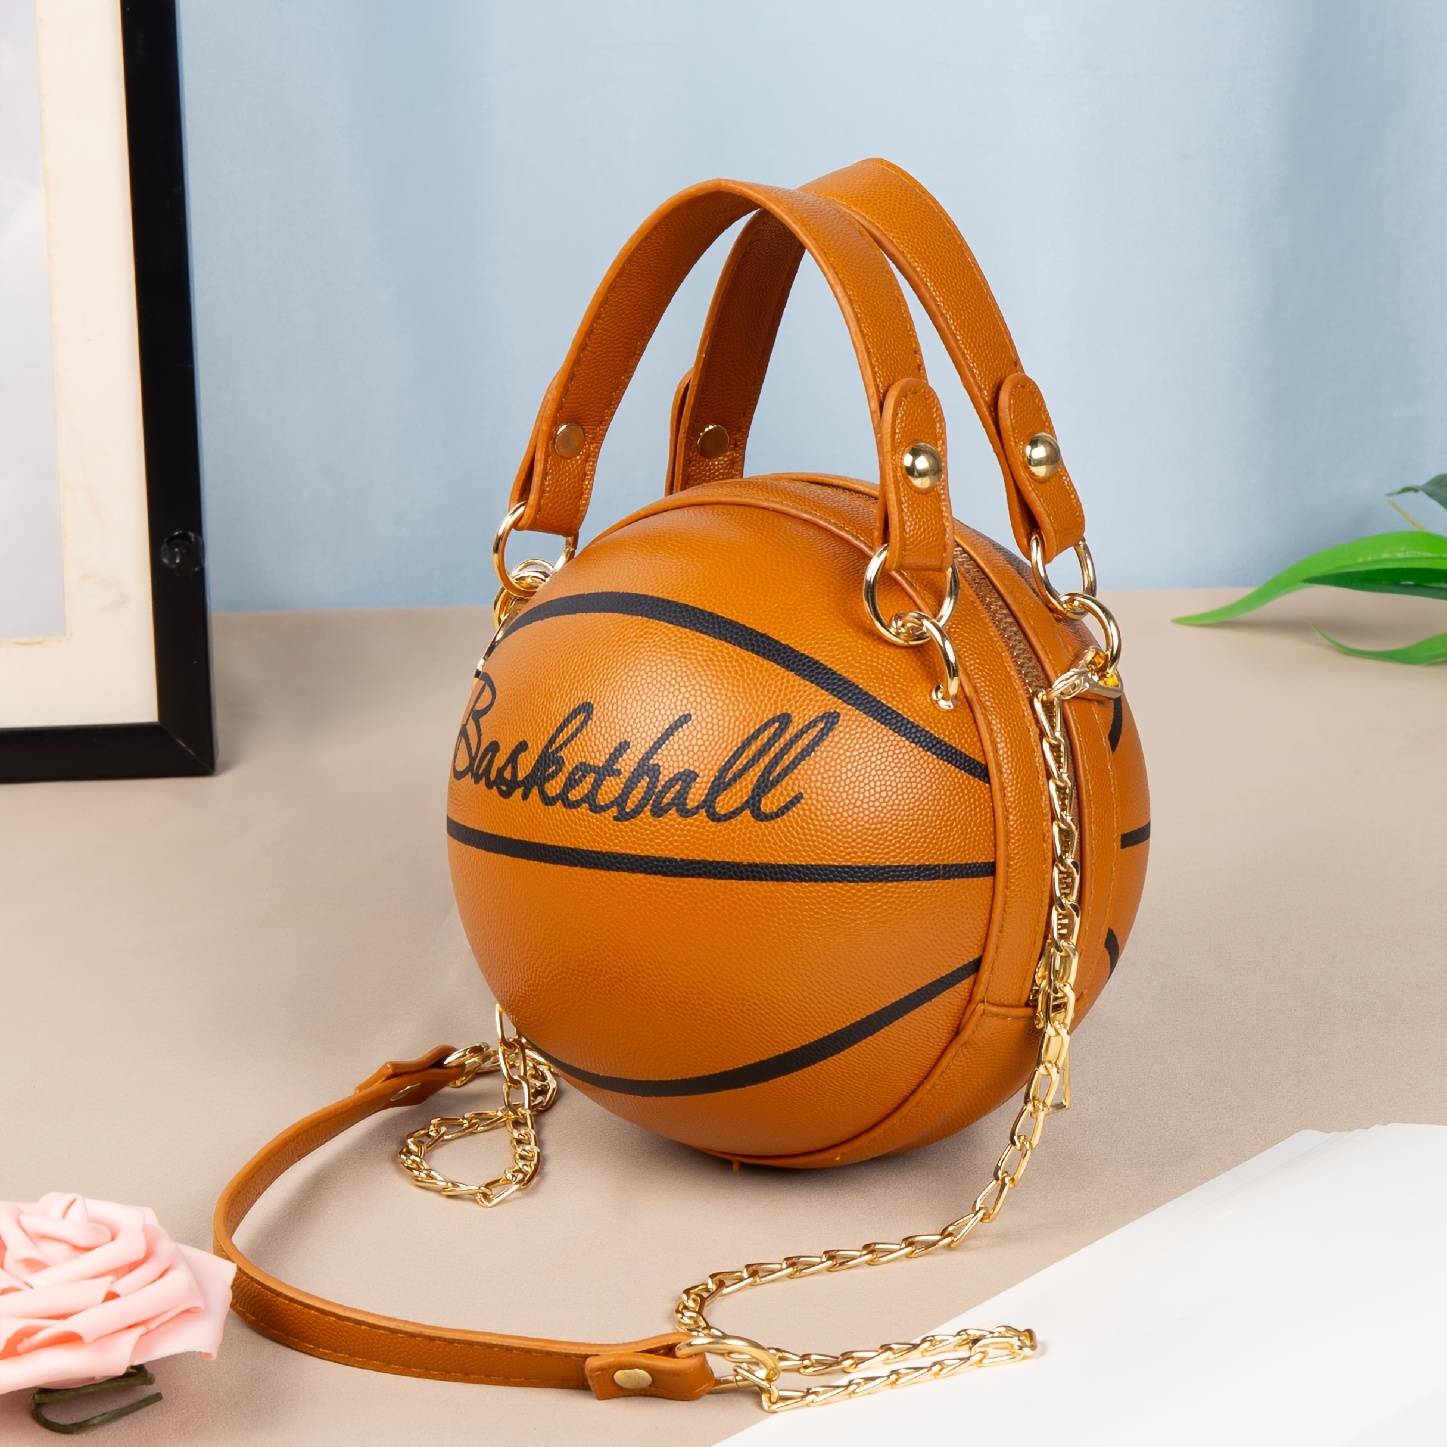 Women's Basketball Handbag, Women's Basketball Bag